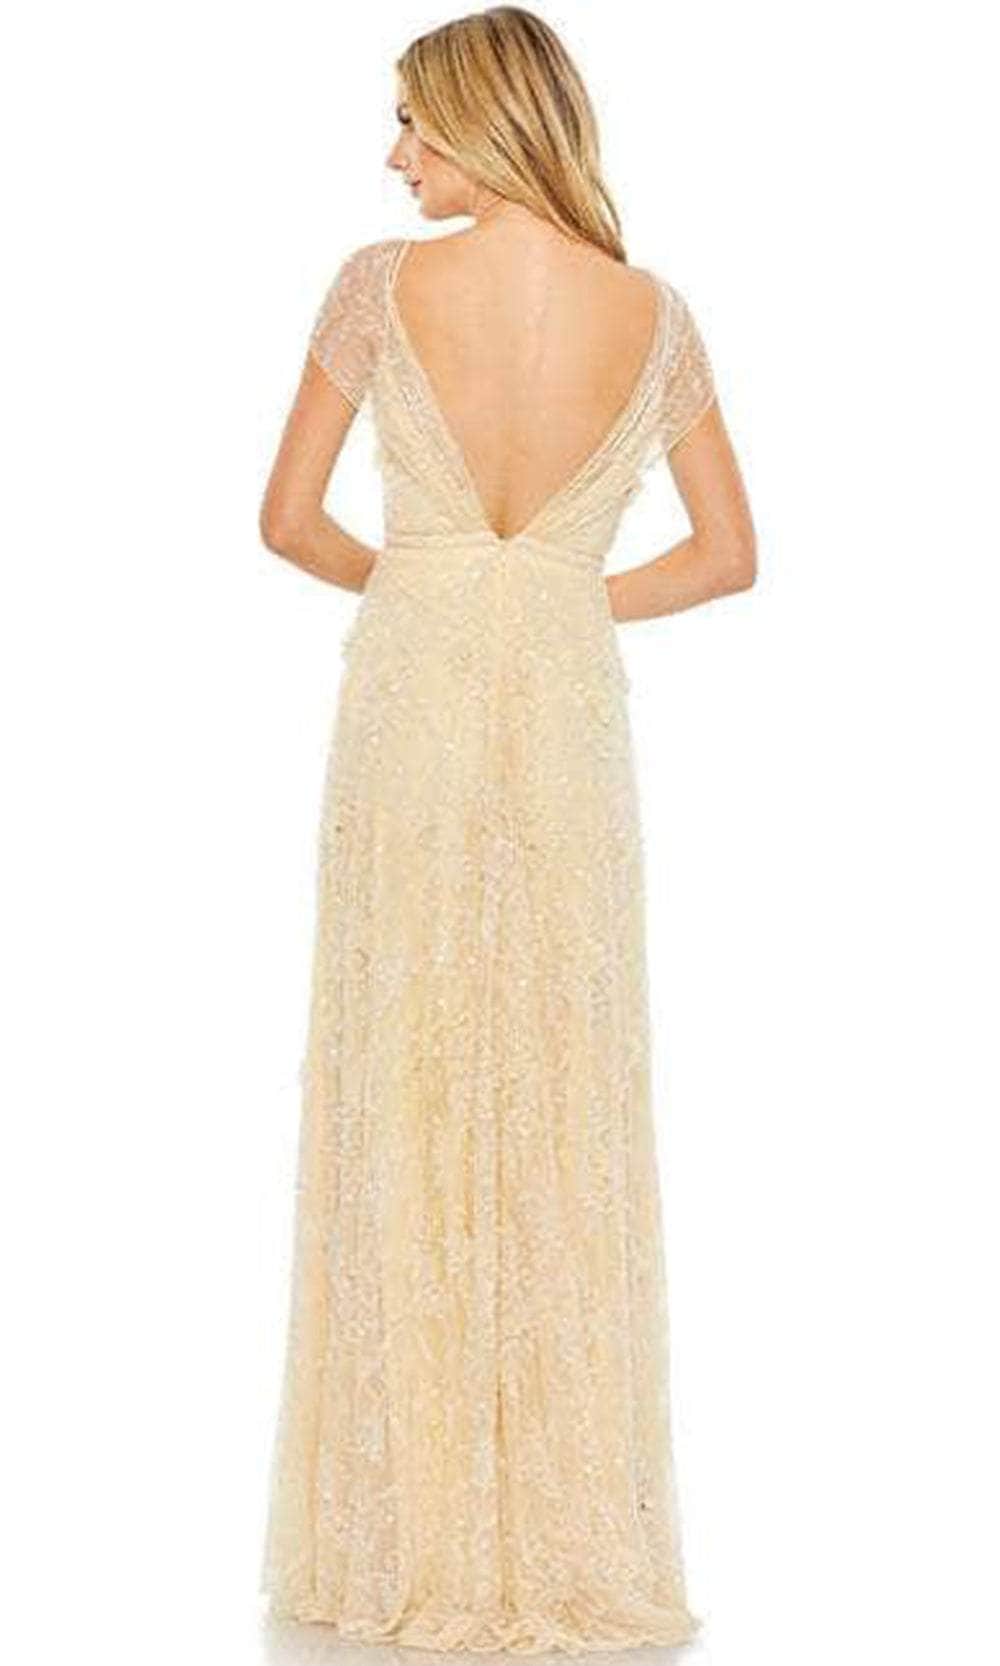 Mac Duggal 93685 - Short Cap Sleeve A-Line Dress Special Occasion Dress